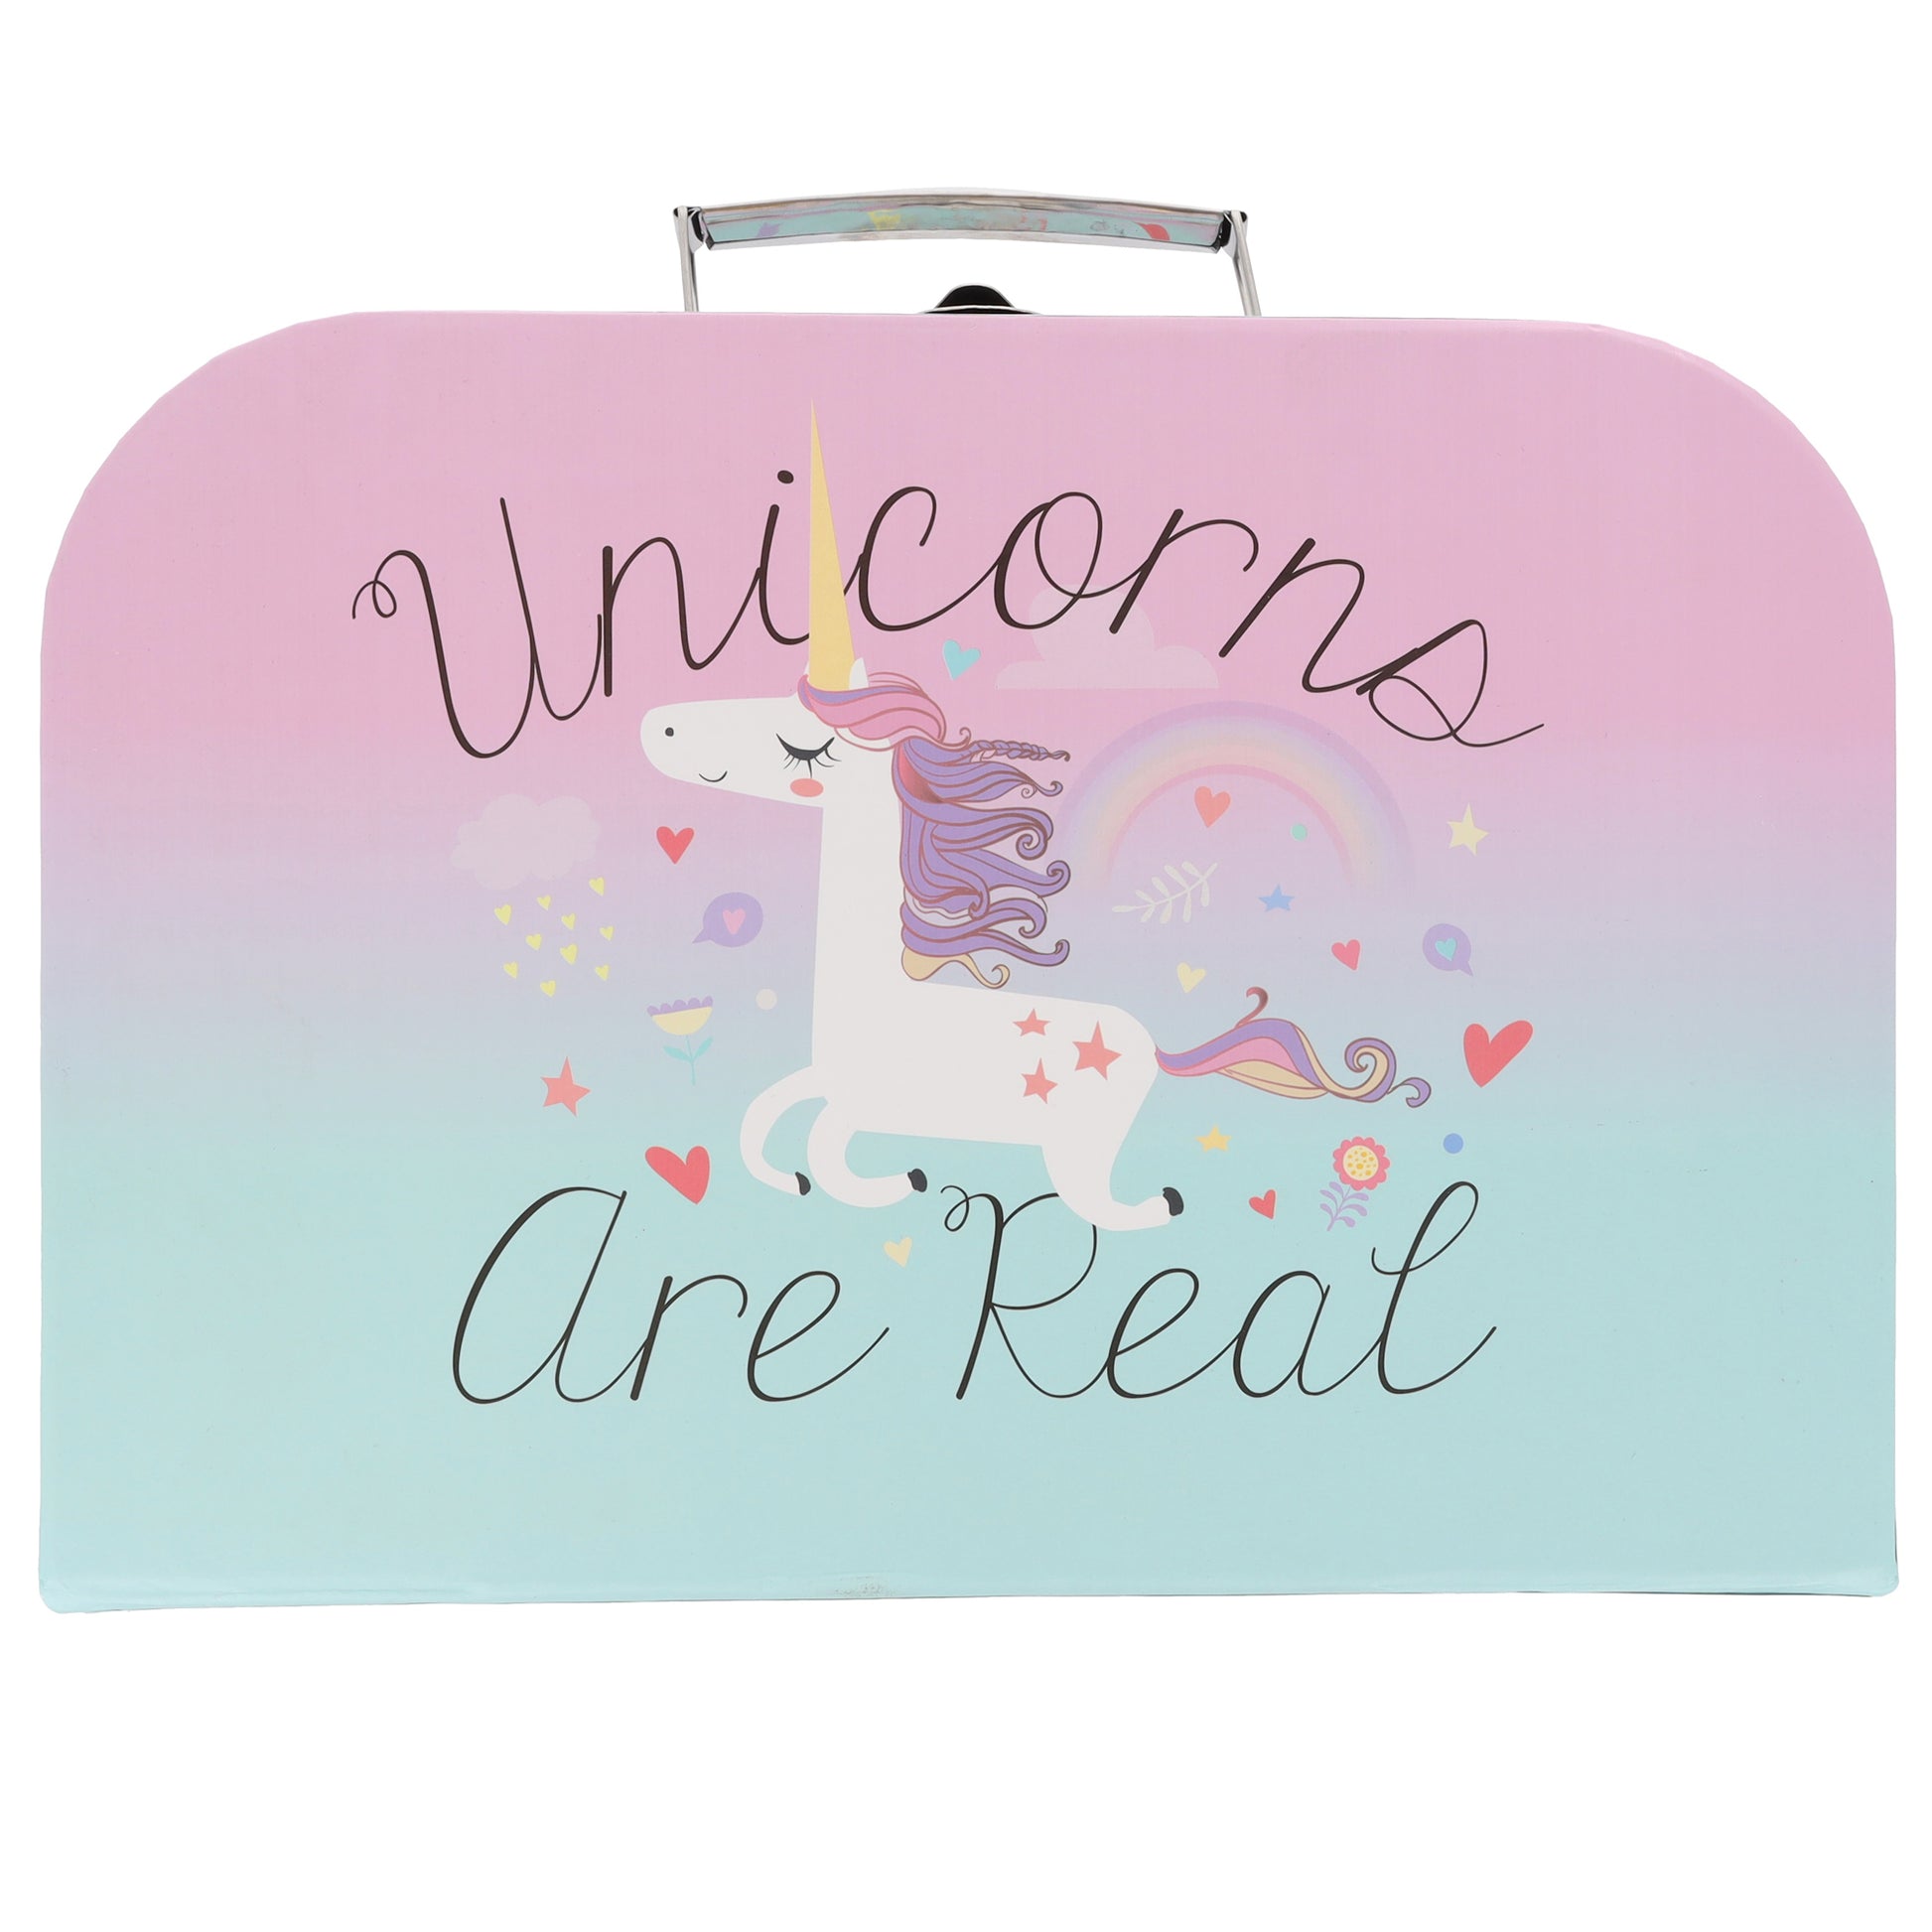 Personalised Storage Suitcase Filled Kids Gift Set  - Always Looking Good - Large Unicorn  